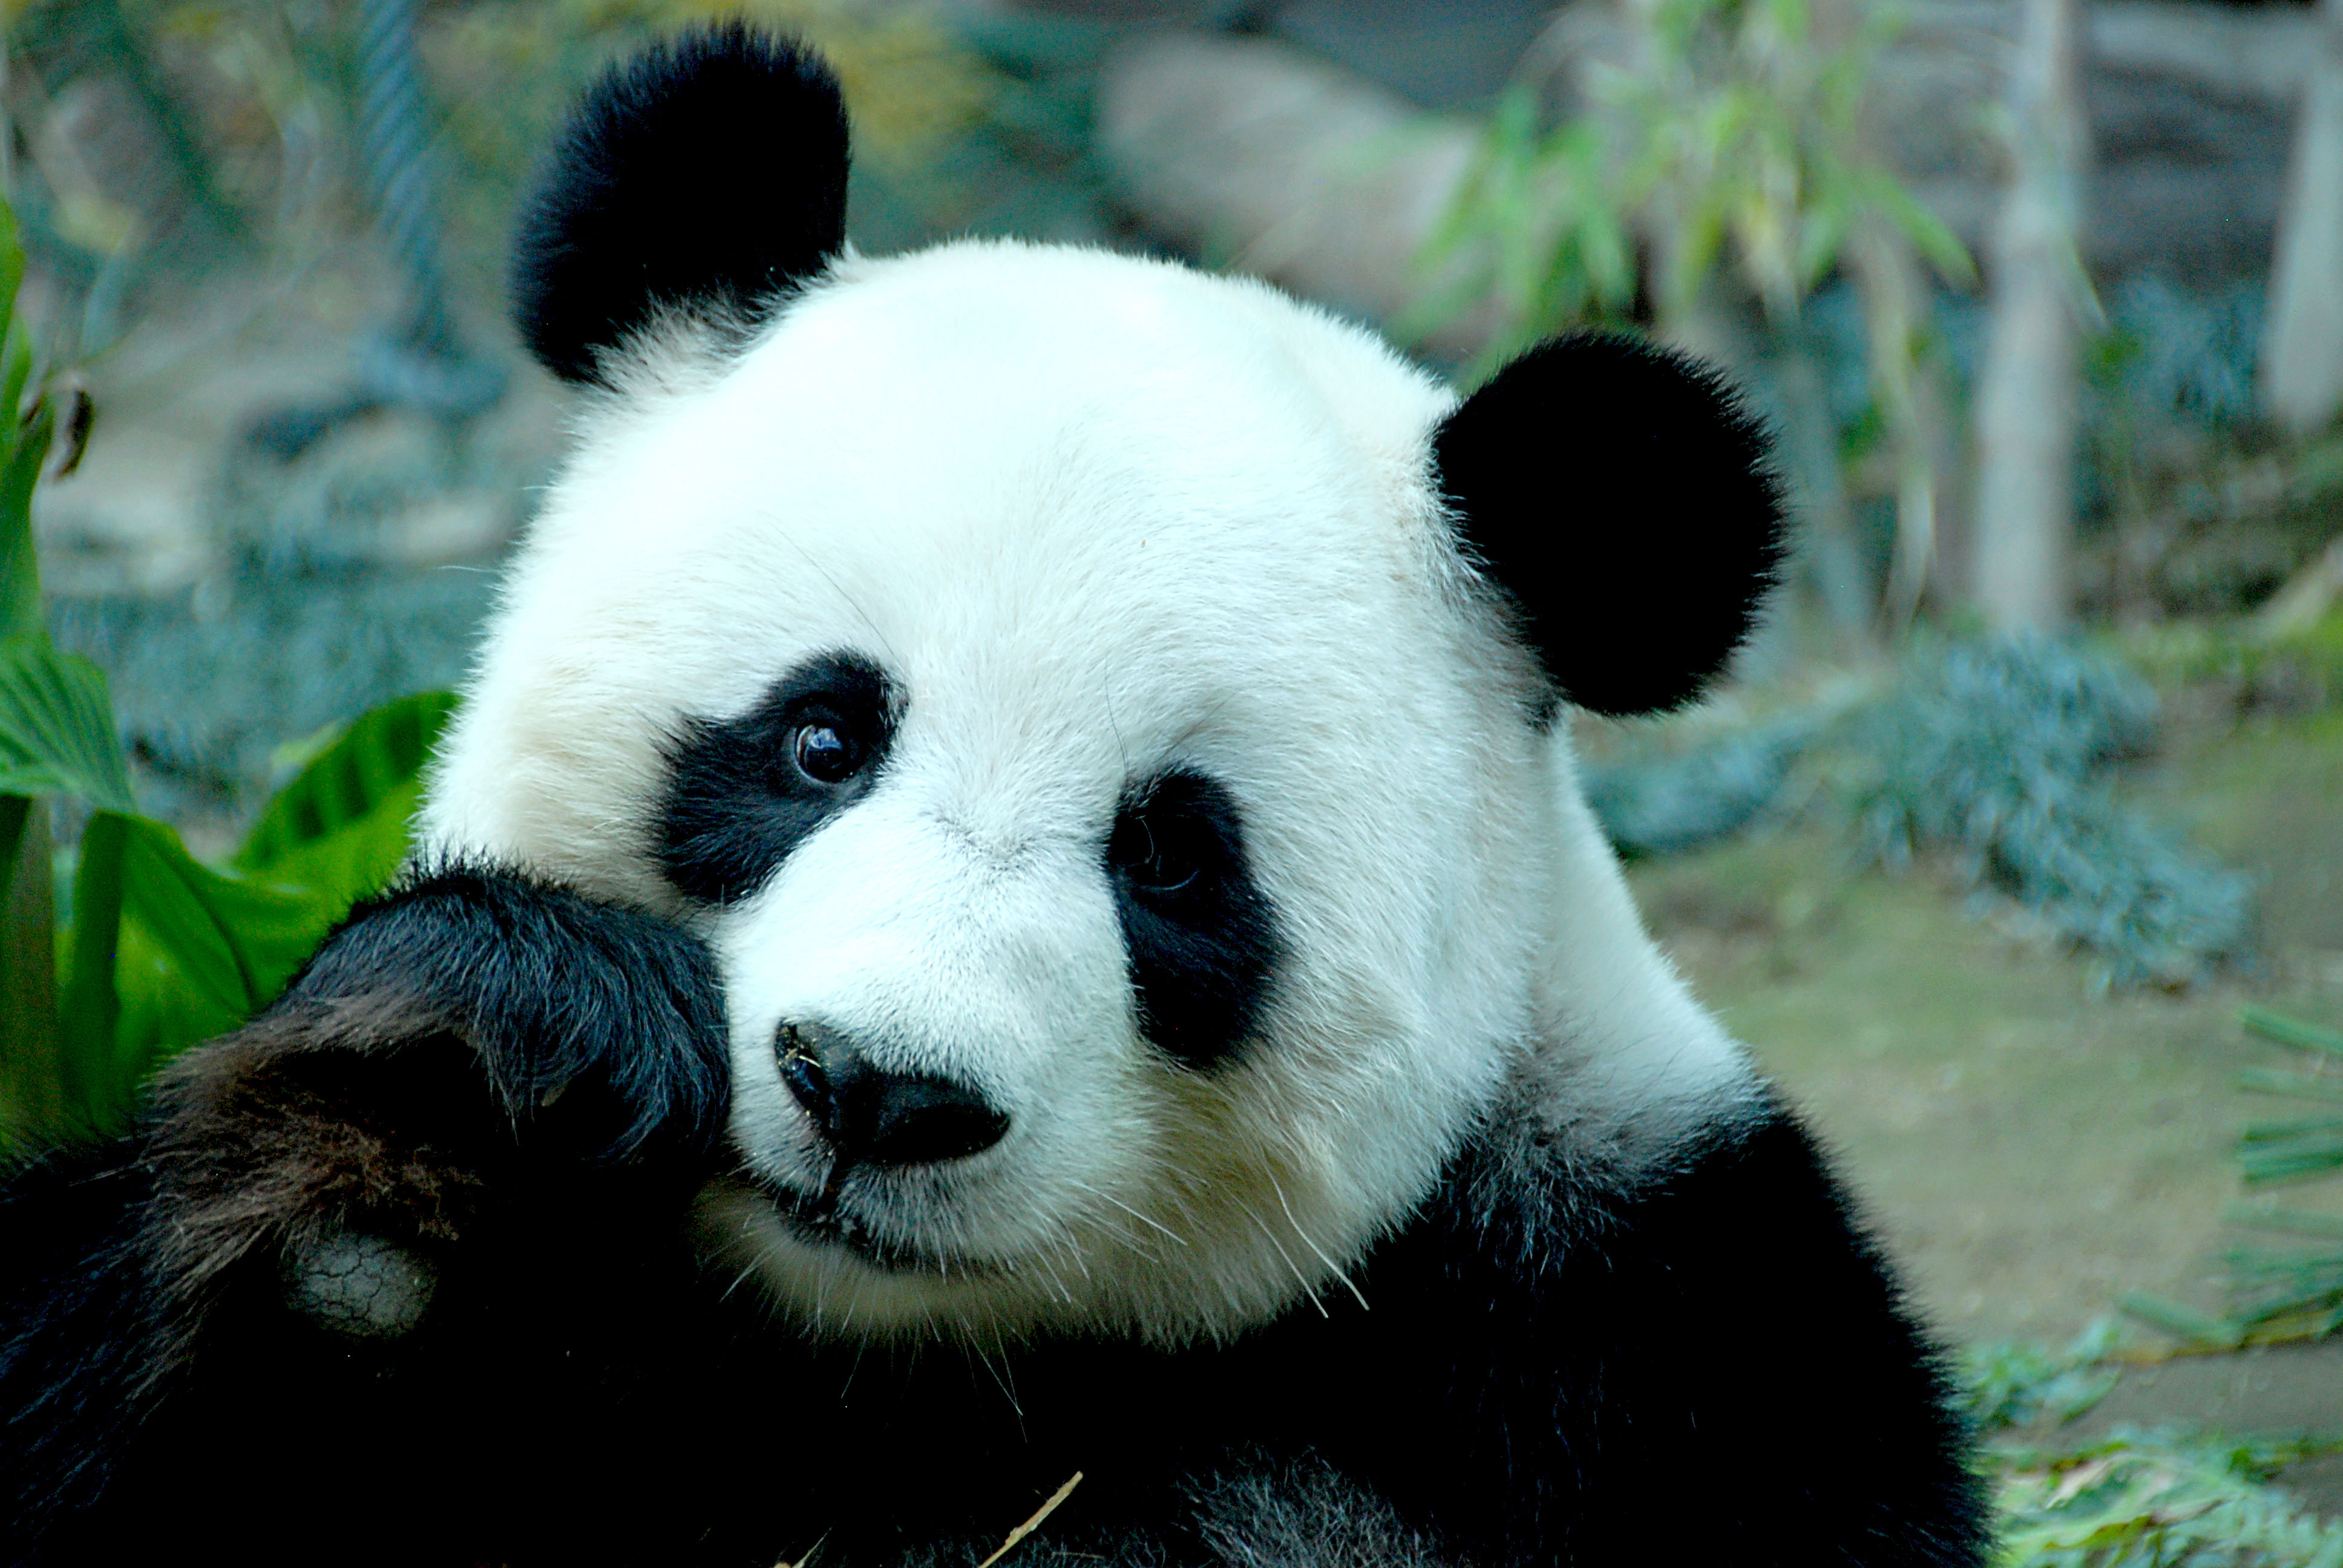  Panda  4k Ultra HD  Wallpaper  Background Image 3872x2592